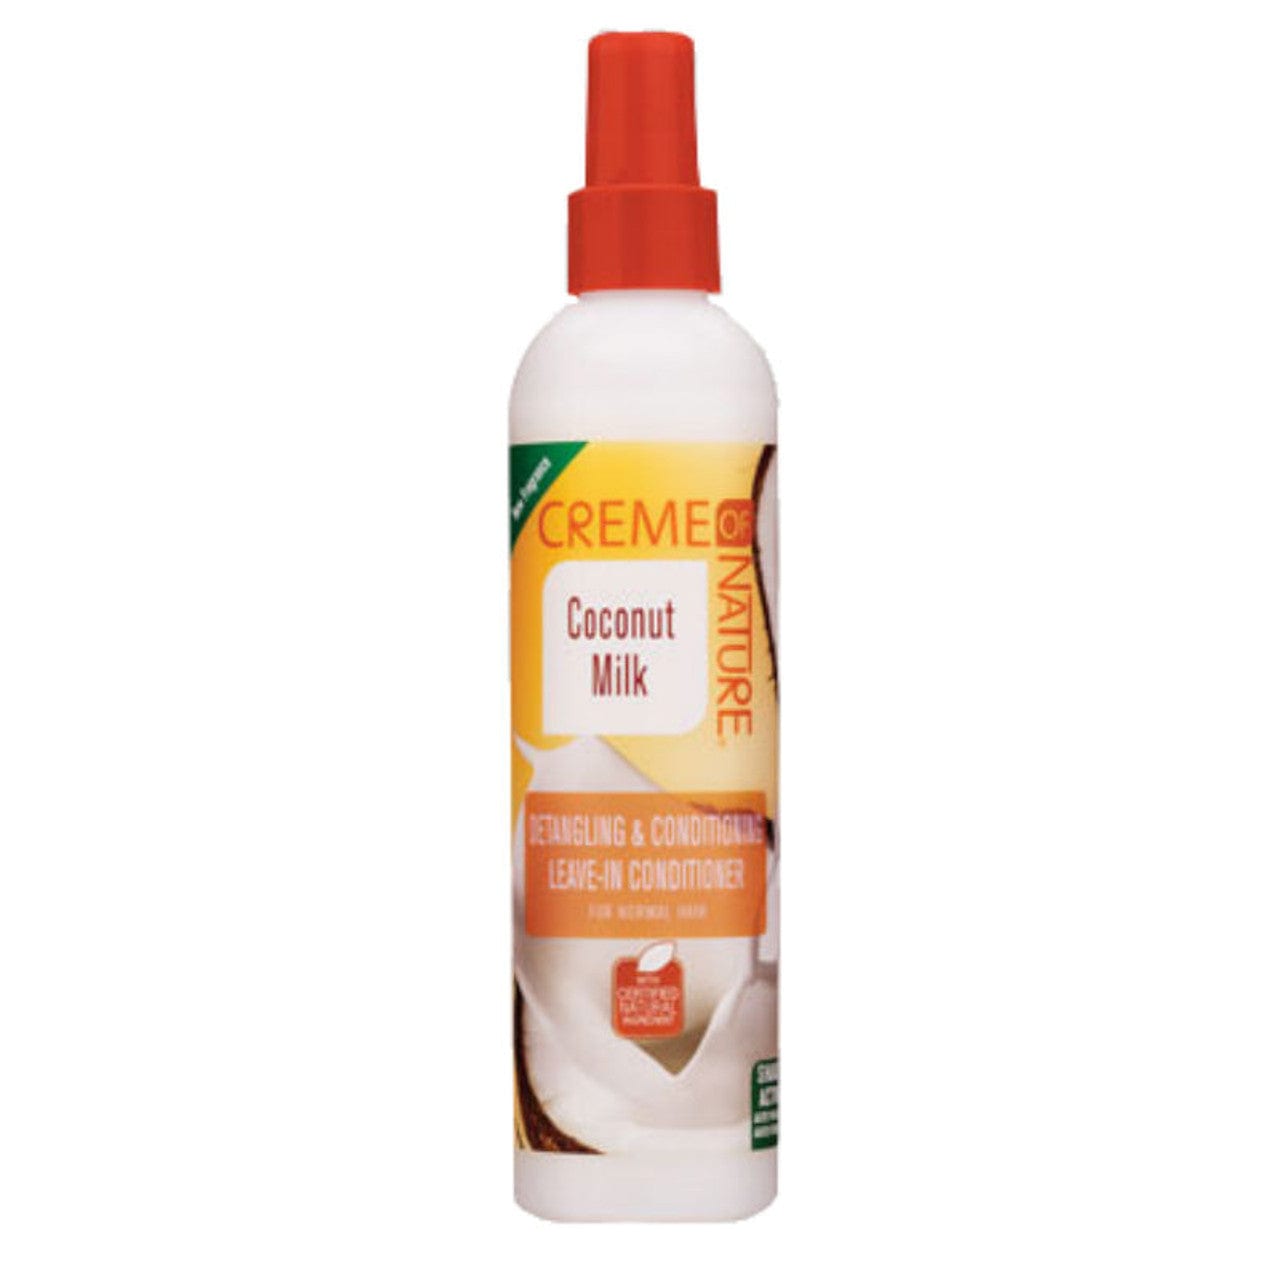 Creme of Nature Coconut Milk Detangling & Conditioning Leave-In Conditioner 8.45 OZ